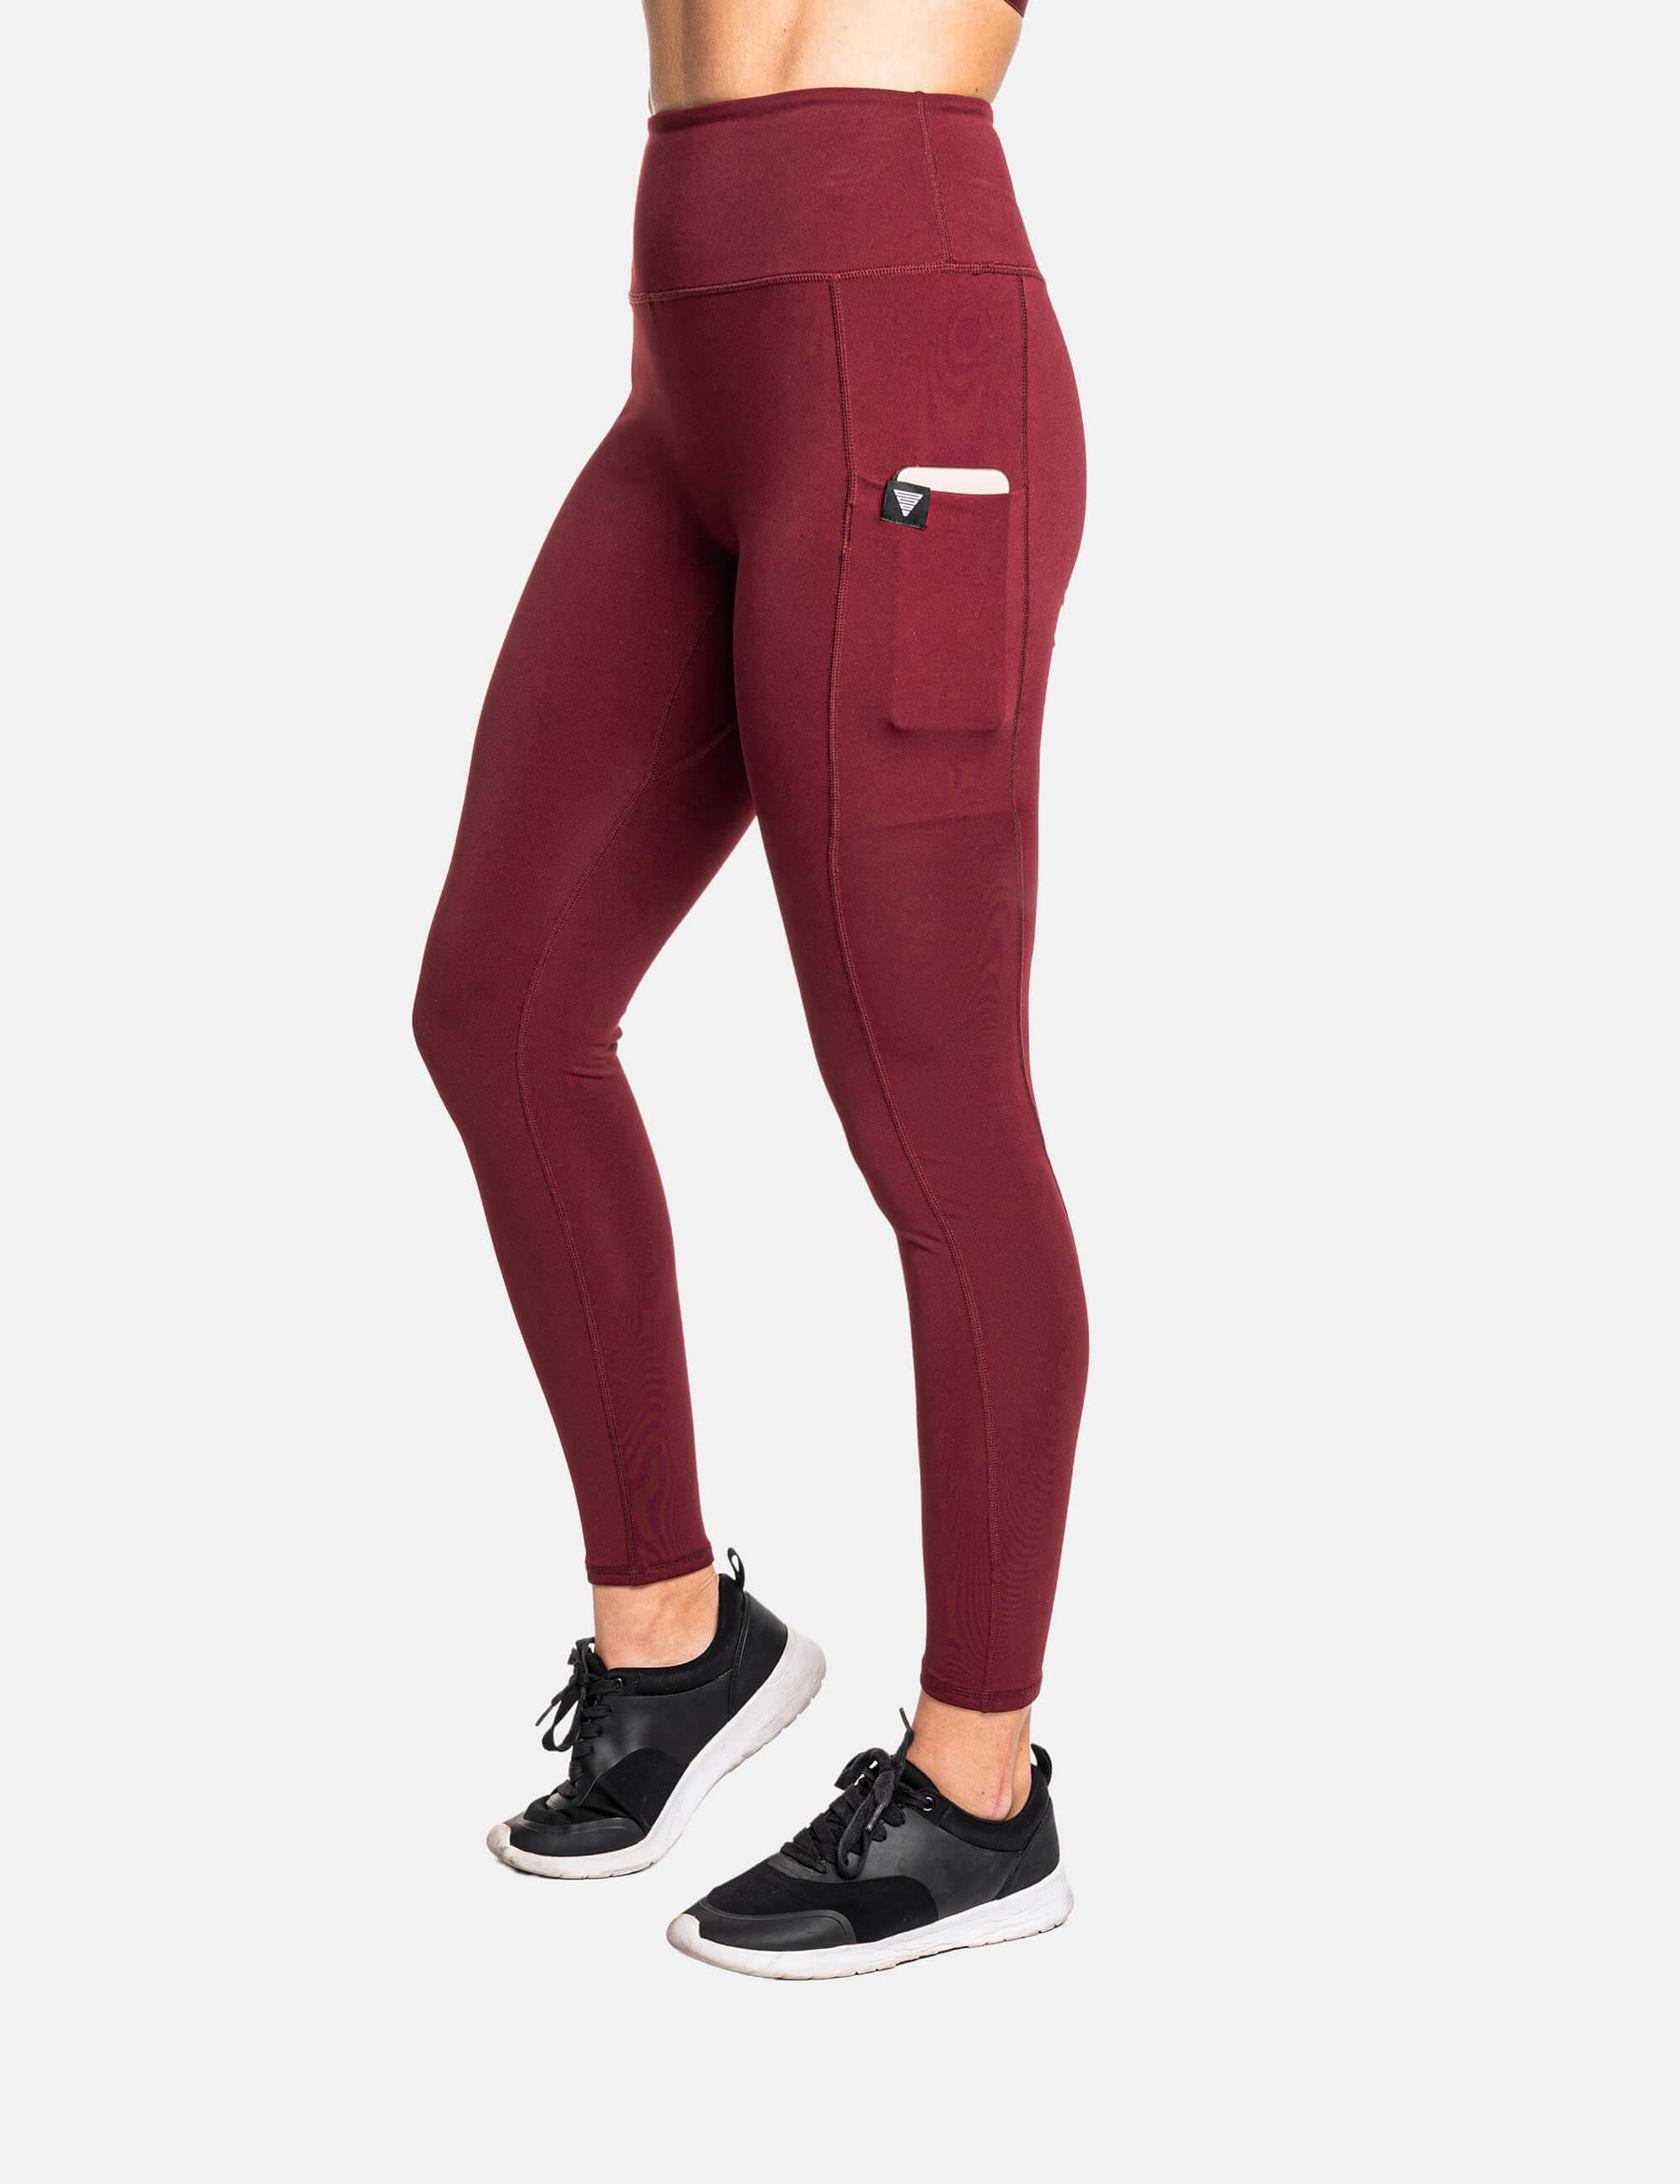 product photo of burgundy calisthenics leggings. Front side